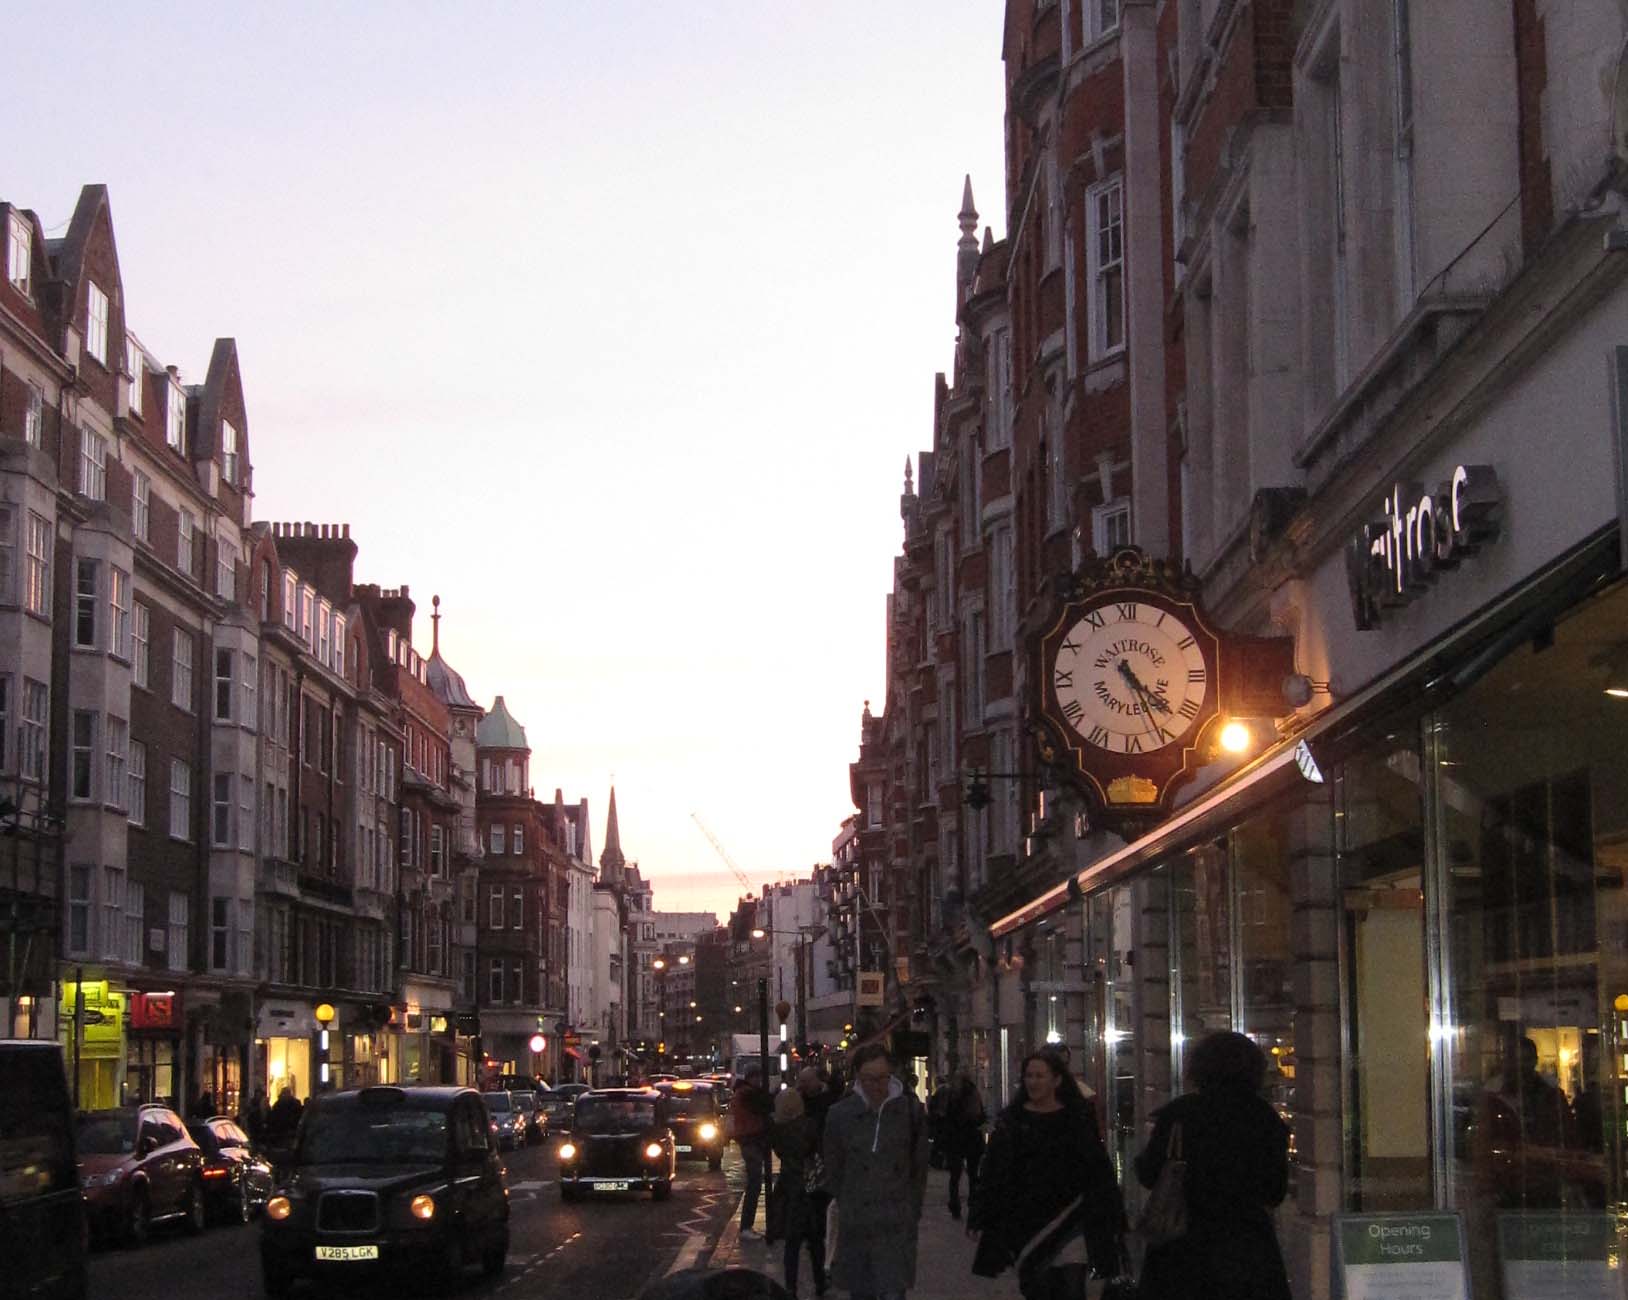 Marylebone High St at dusk